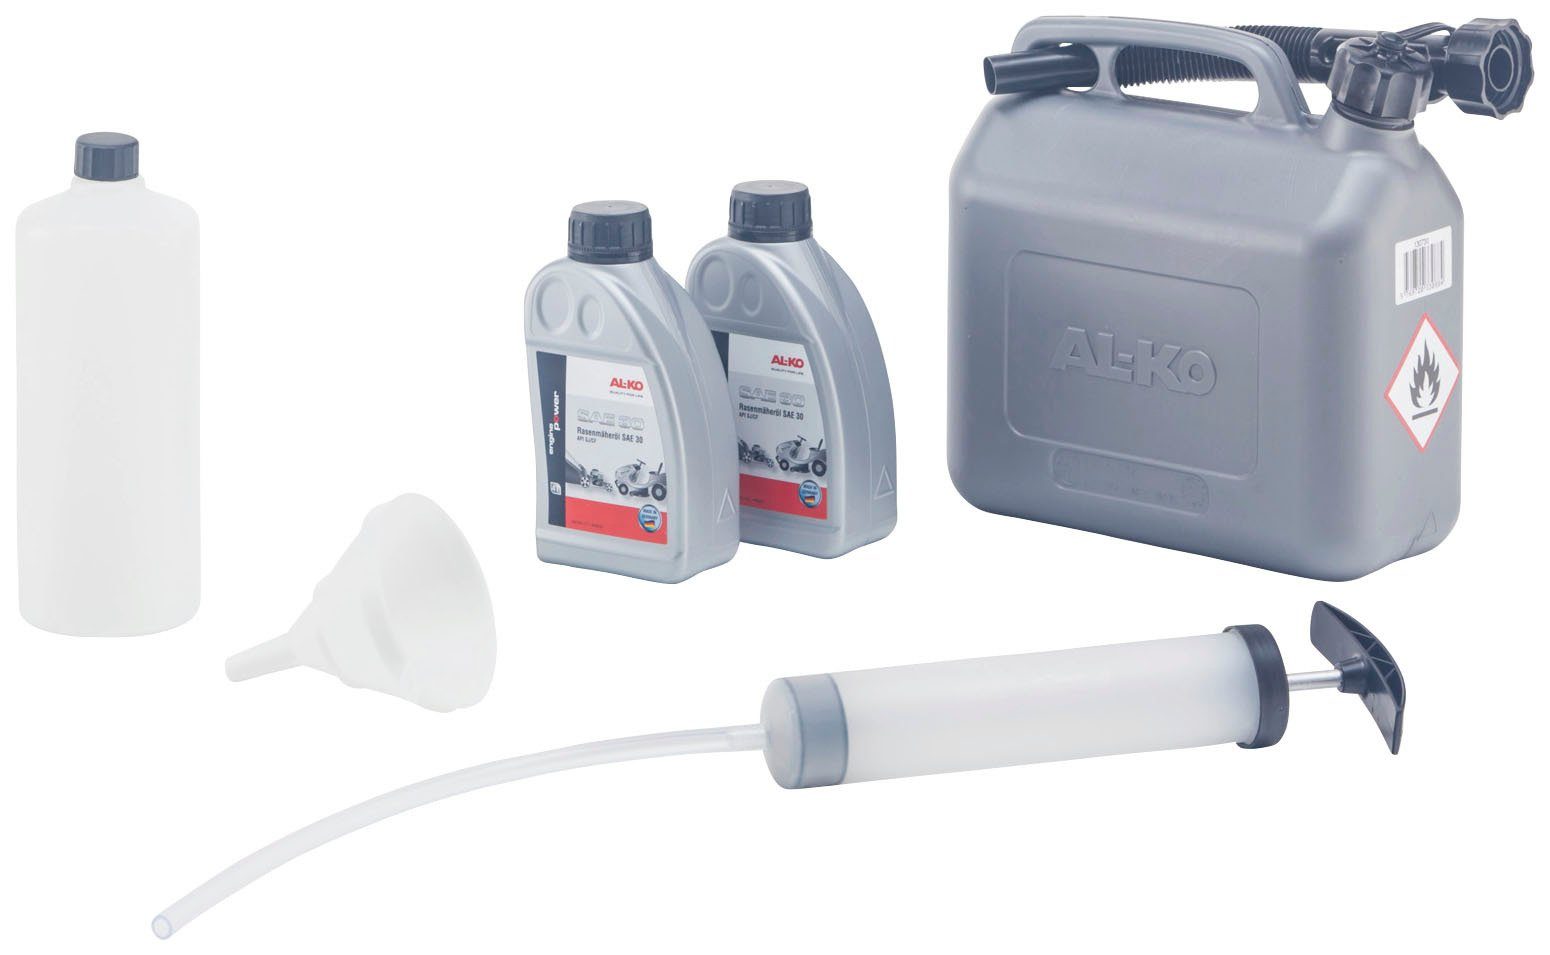 AL-KO Universalöl Starter-Set für Benzinrasenmäher, 1 x Motor-Service-Set, 2 x Rasenmäher-Motoröl, 1 x Benzinkanister